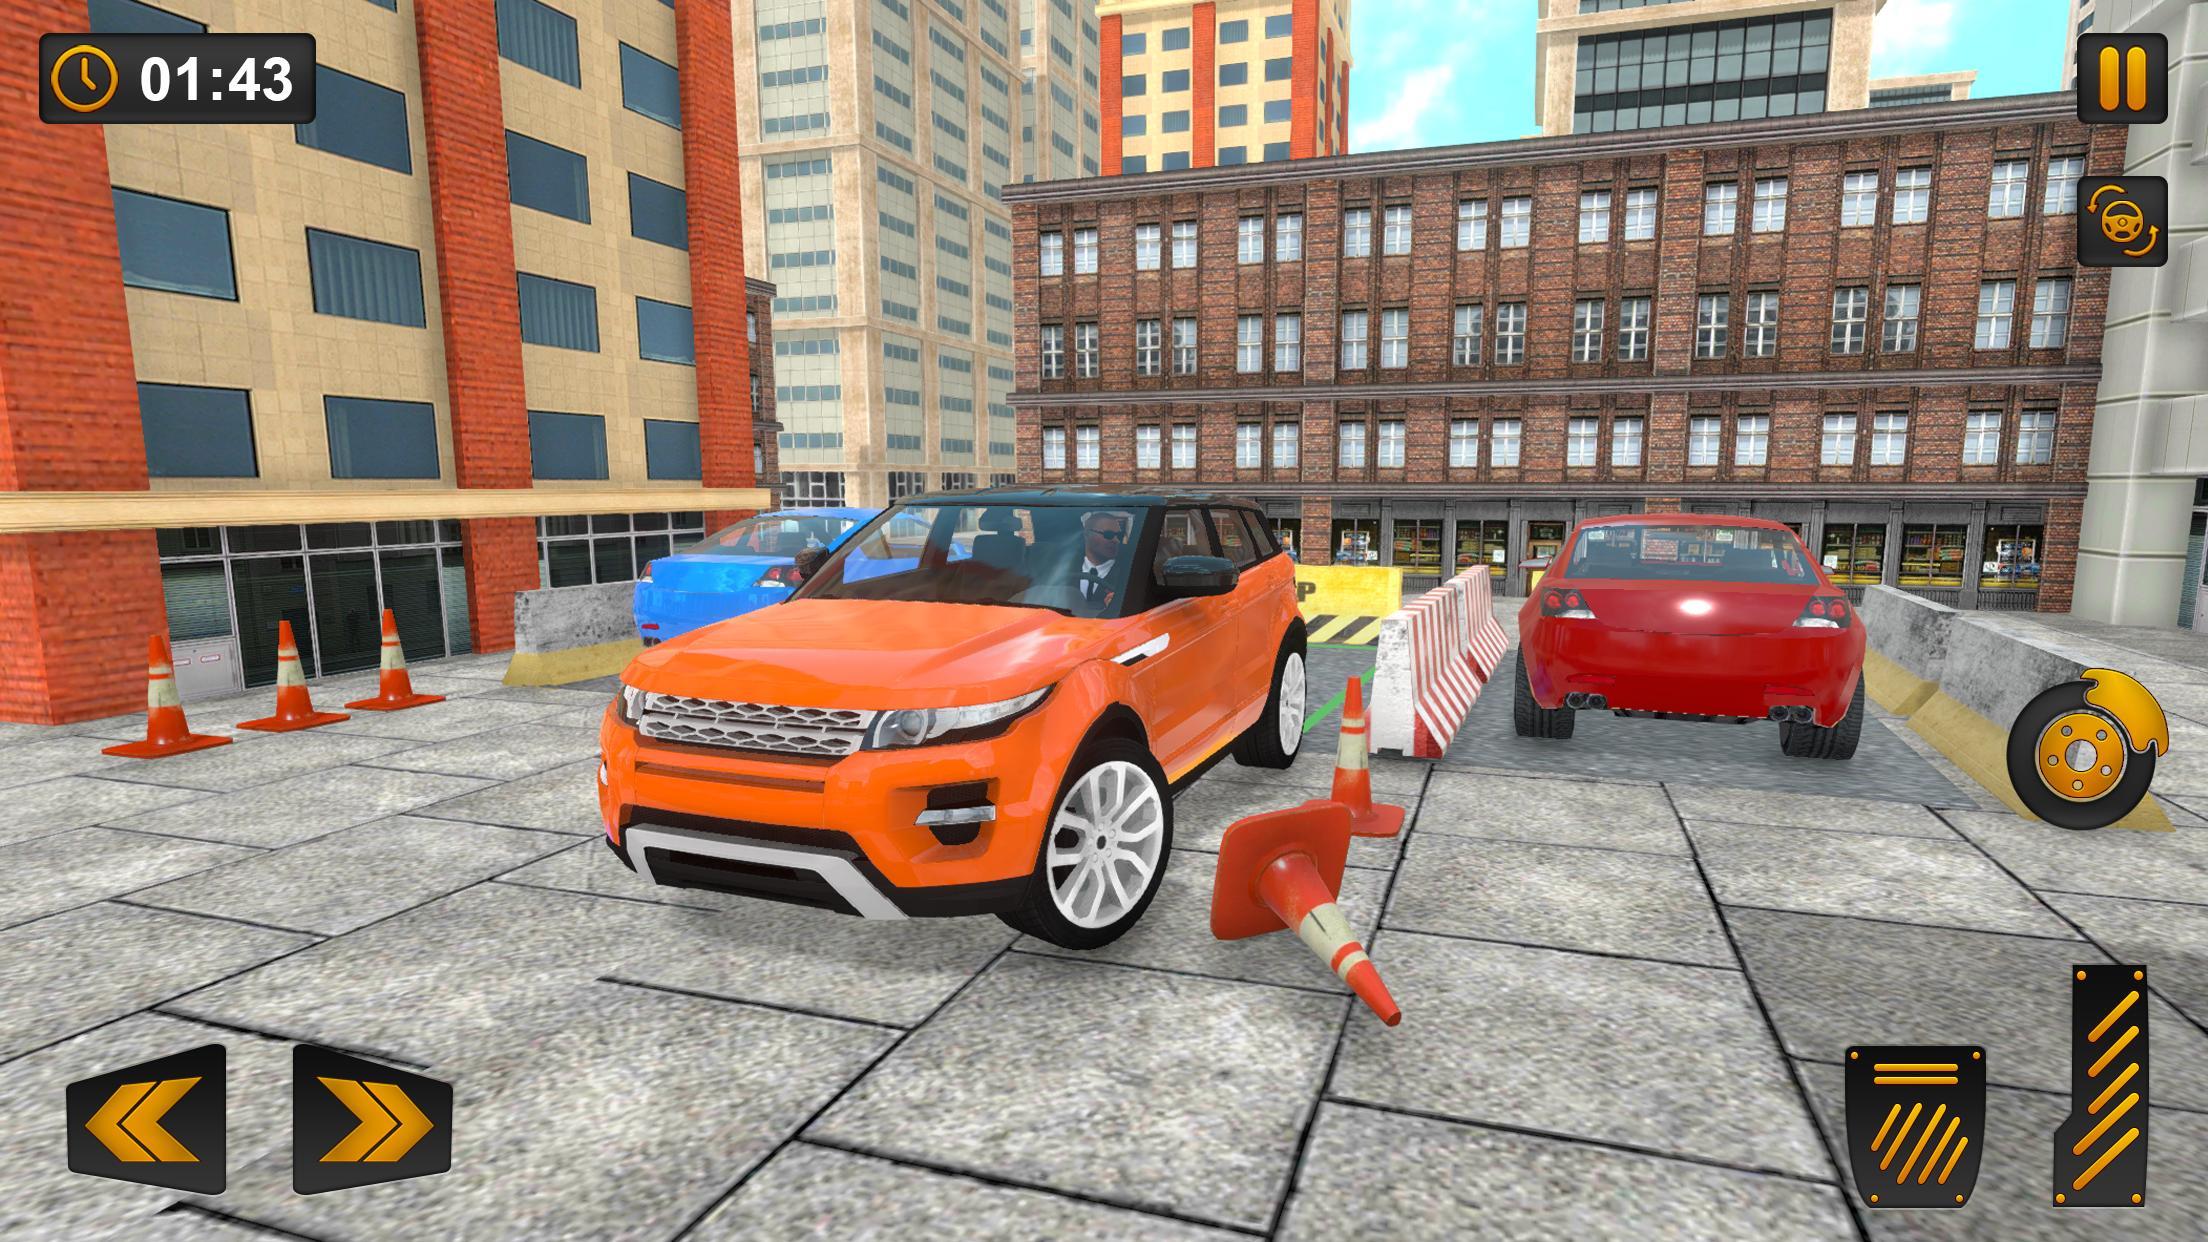 Игра реал кар. Car parking игра. Real car parking 3d. Car parking 3 d Simulator game. Кар паркинг симулятор последняя версия.